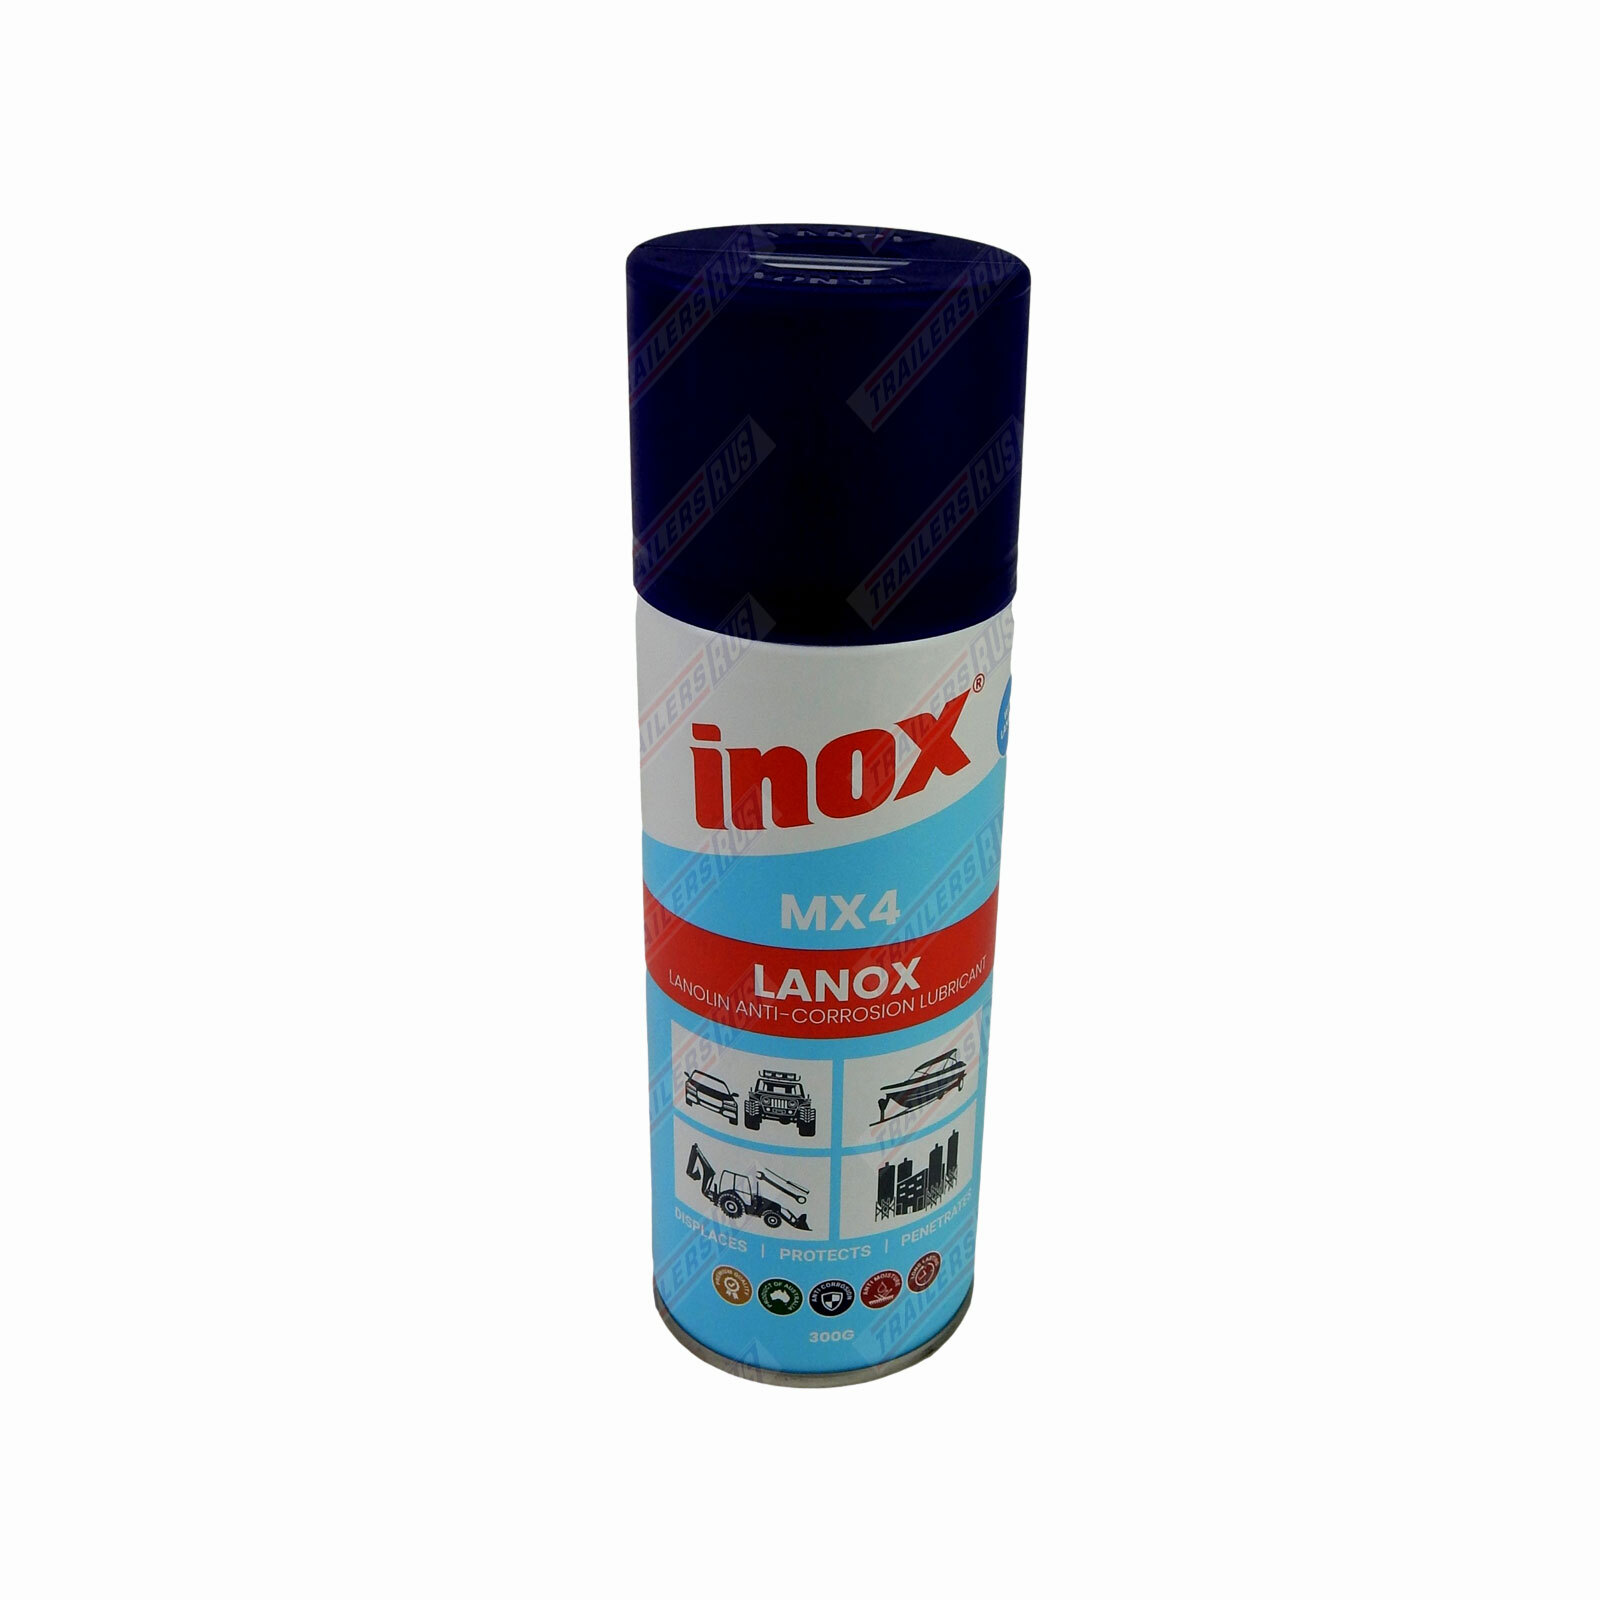 Inox MX3 Lubricant 300gm - Power Tool Lubricants 